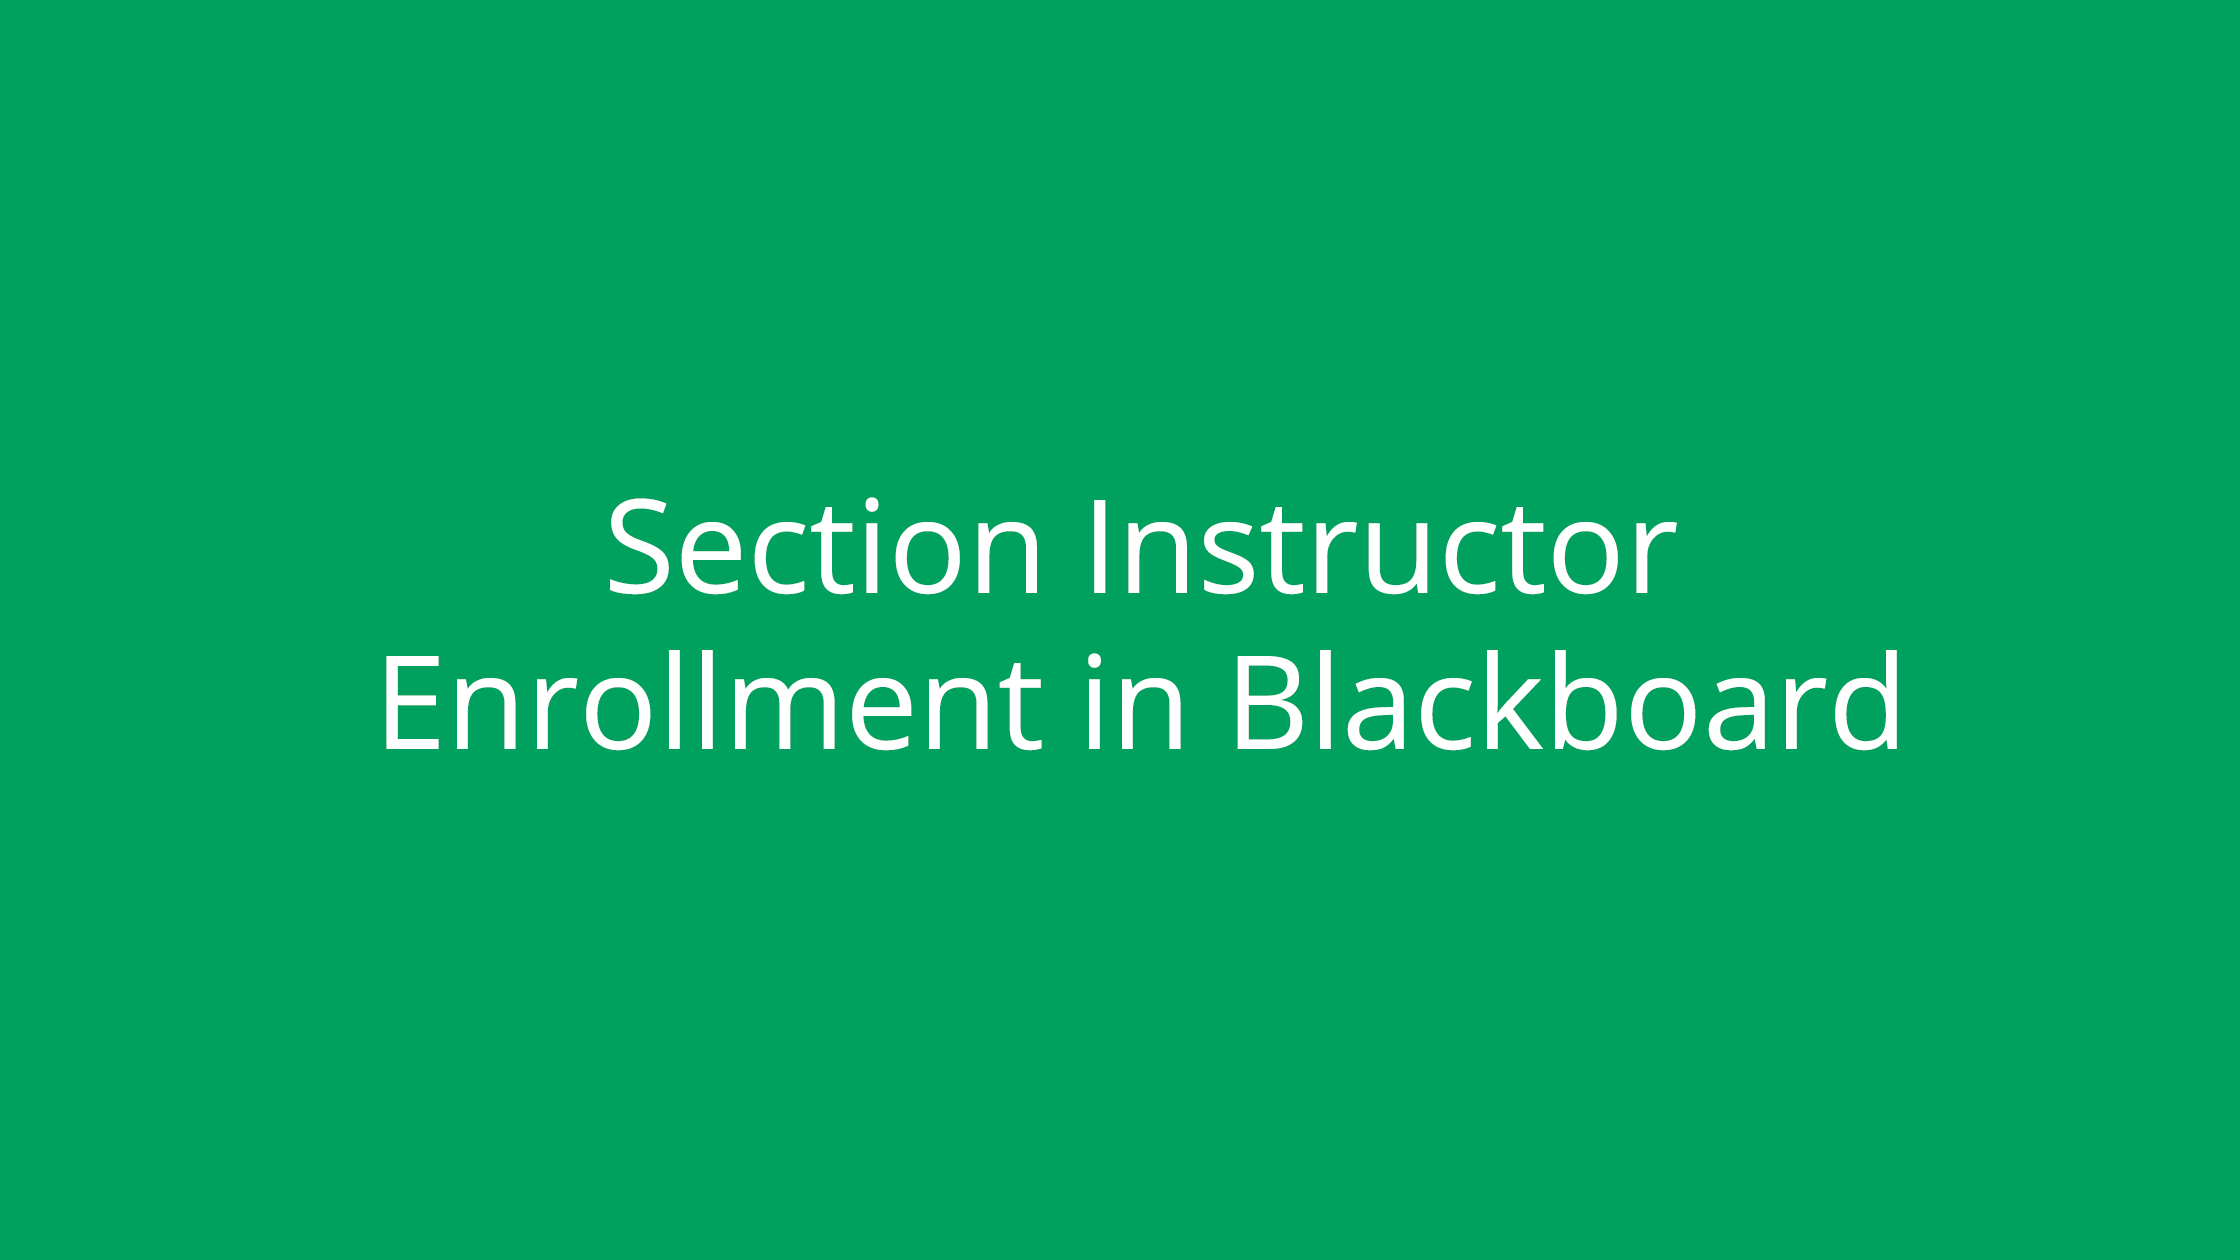 Section Instructor Enrollment in Blackboard